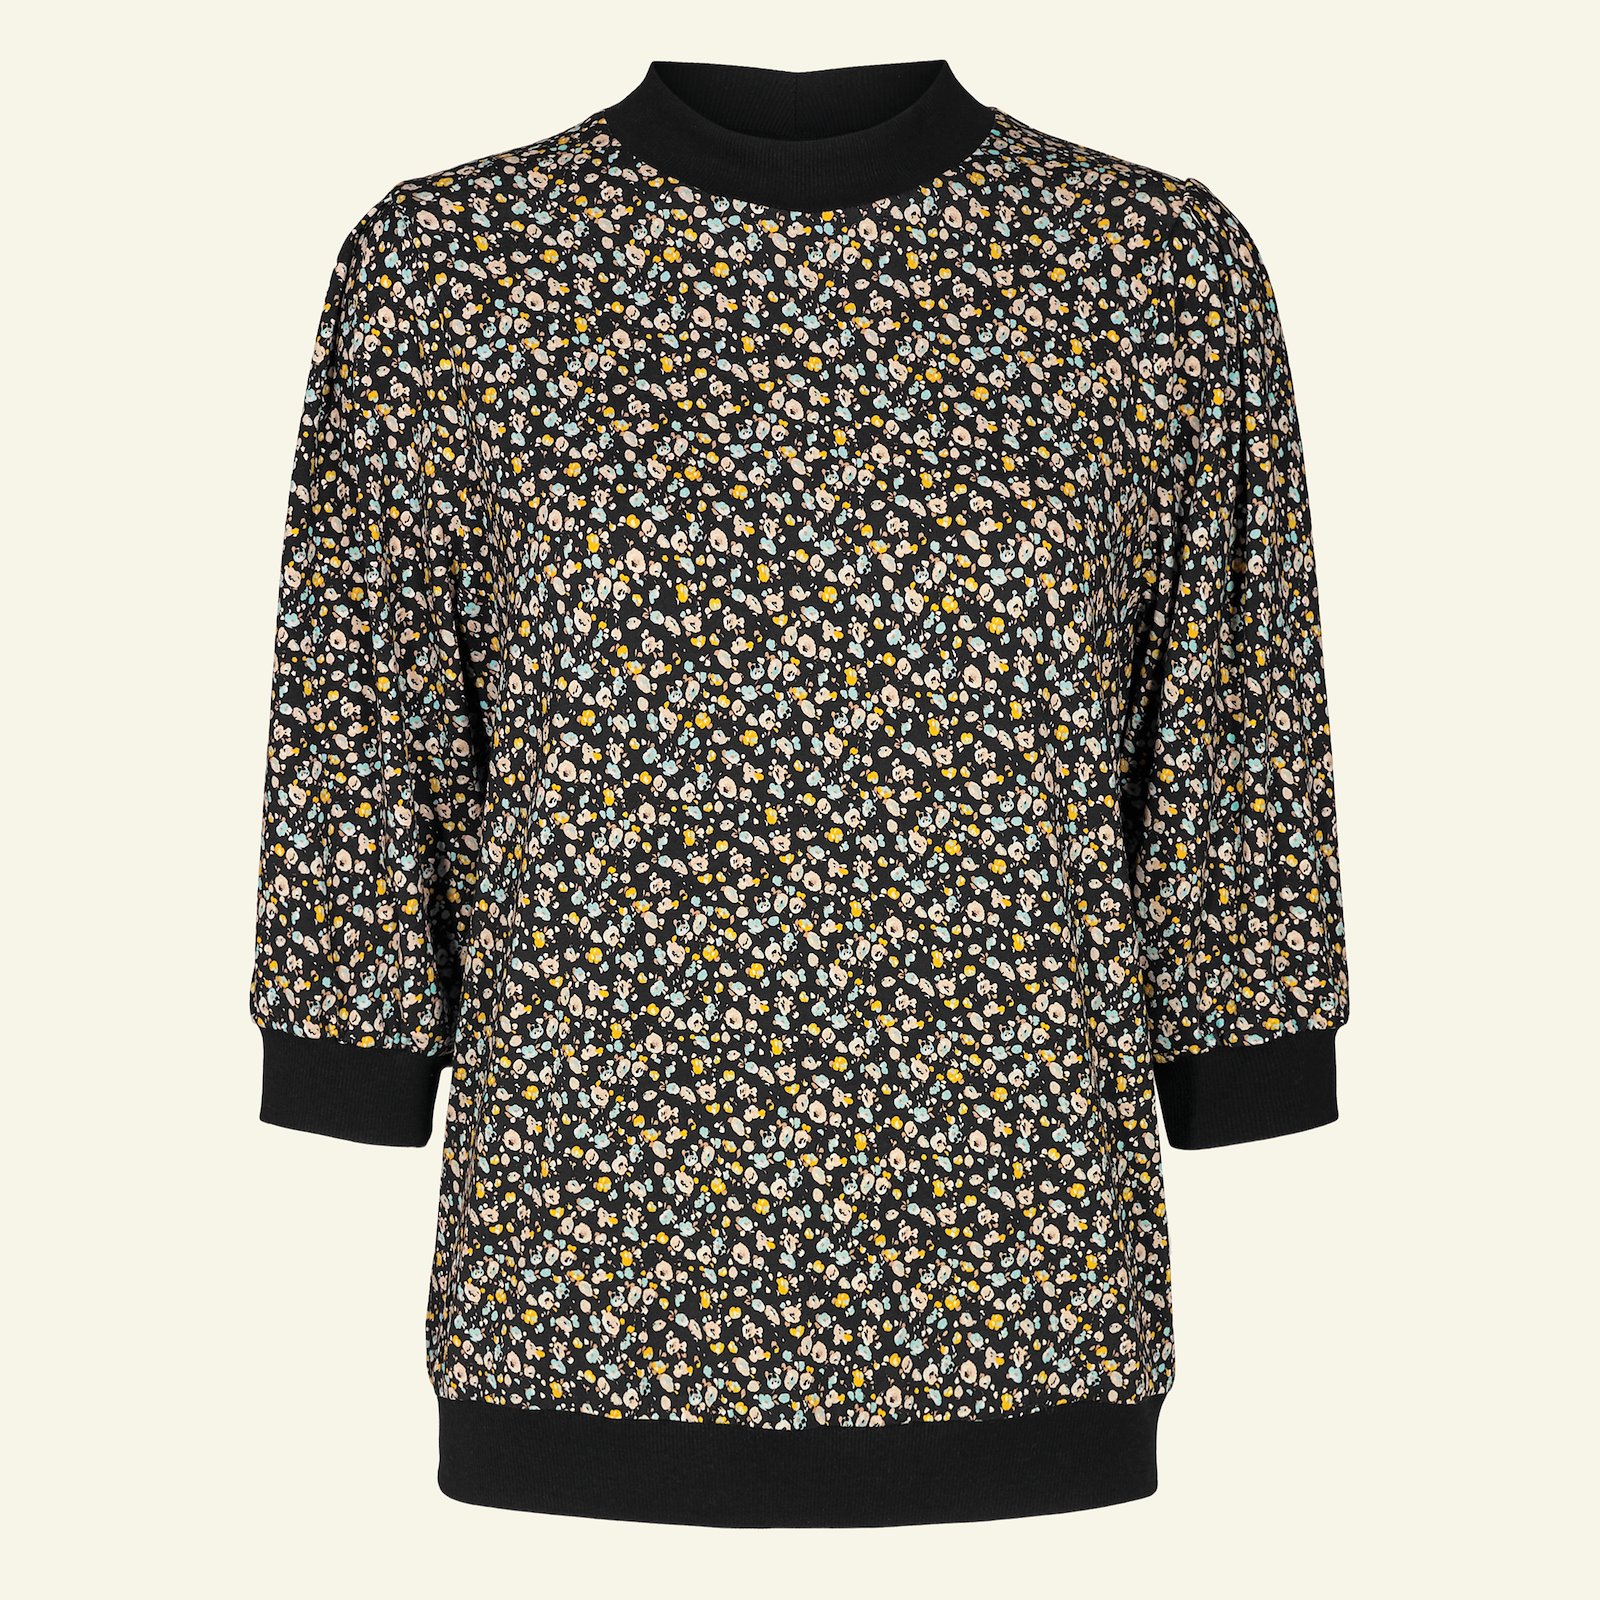 Sweatshirt with puff sleeves, XL p22074_272618_272436_sskit